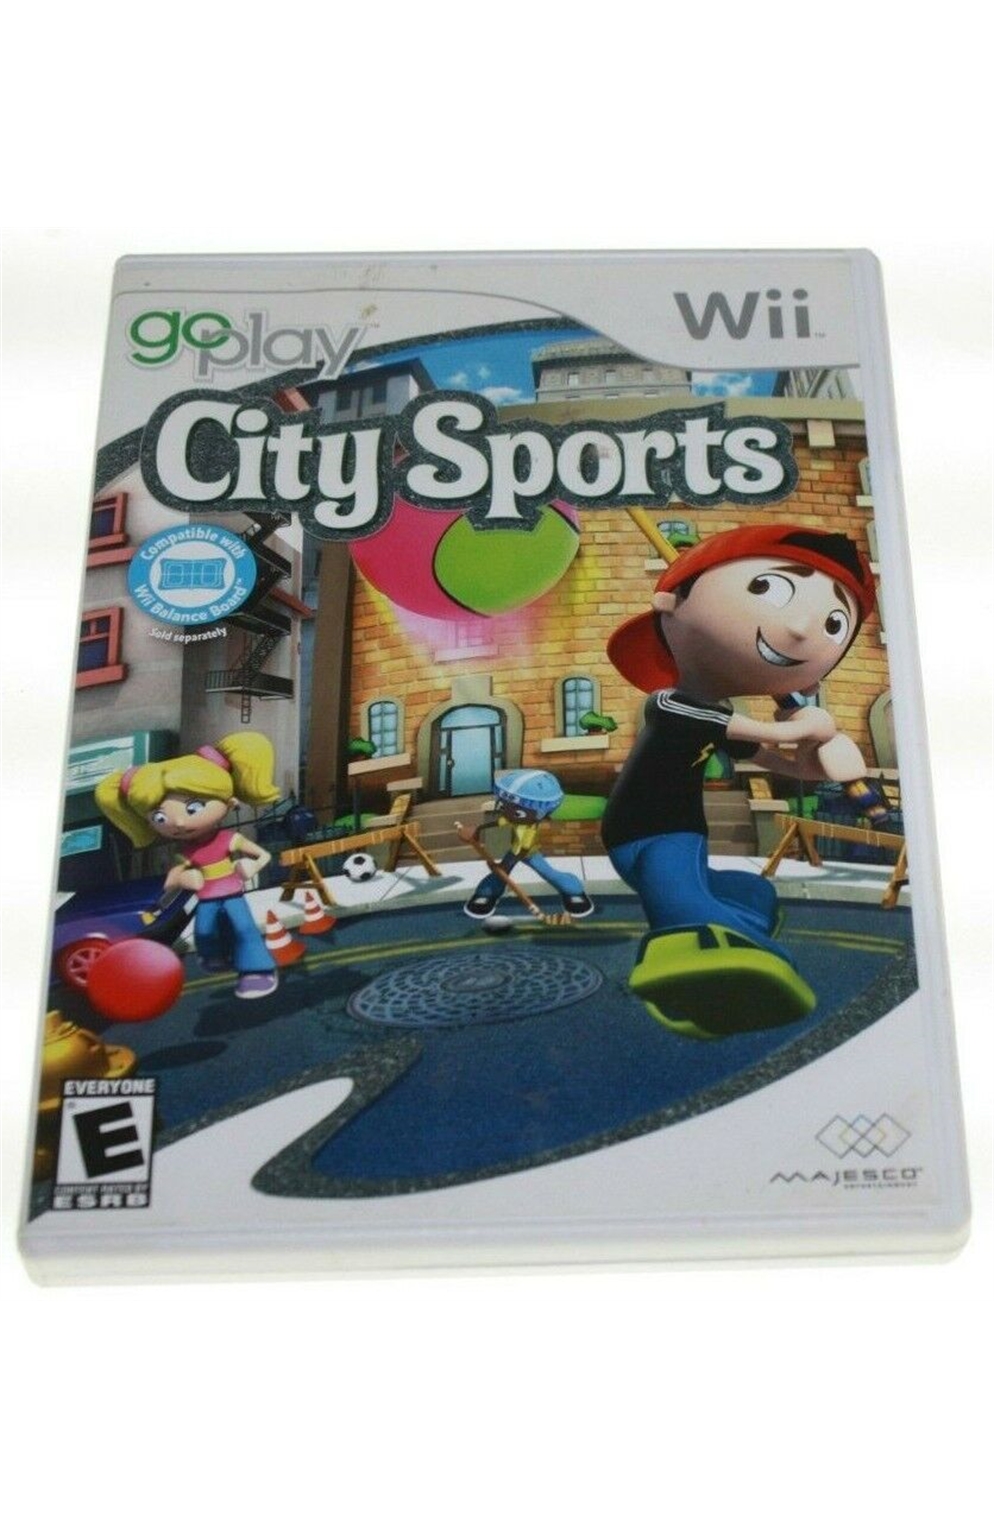 Nintendo Wii Go Play City Sports 